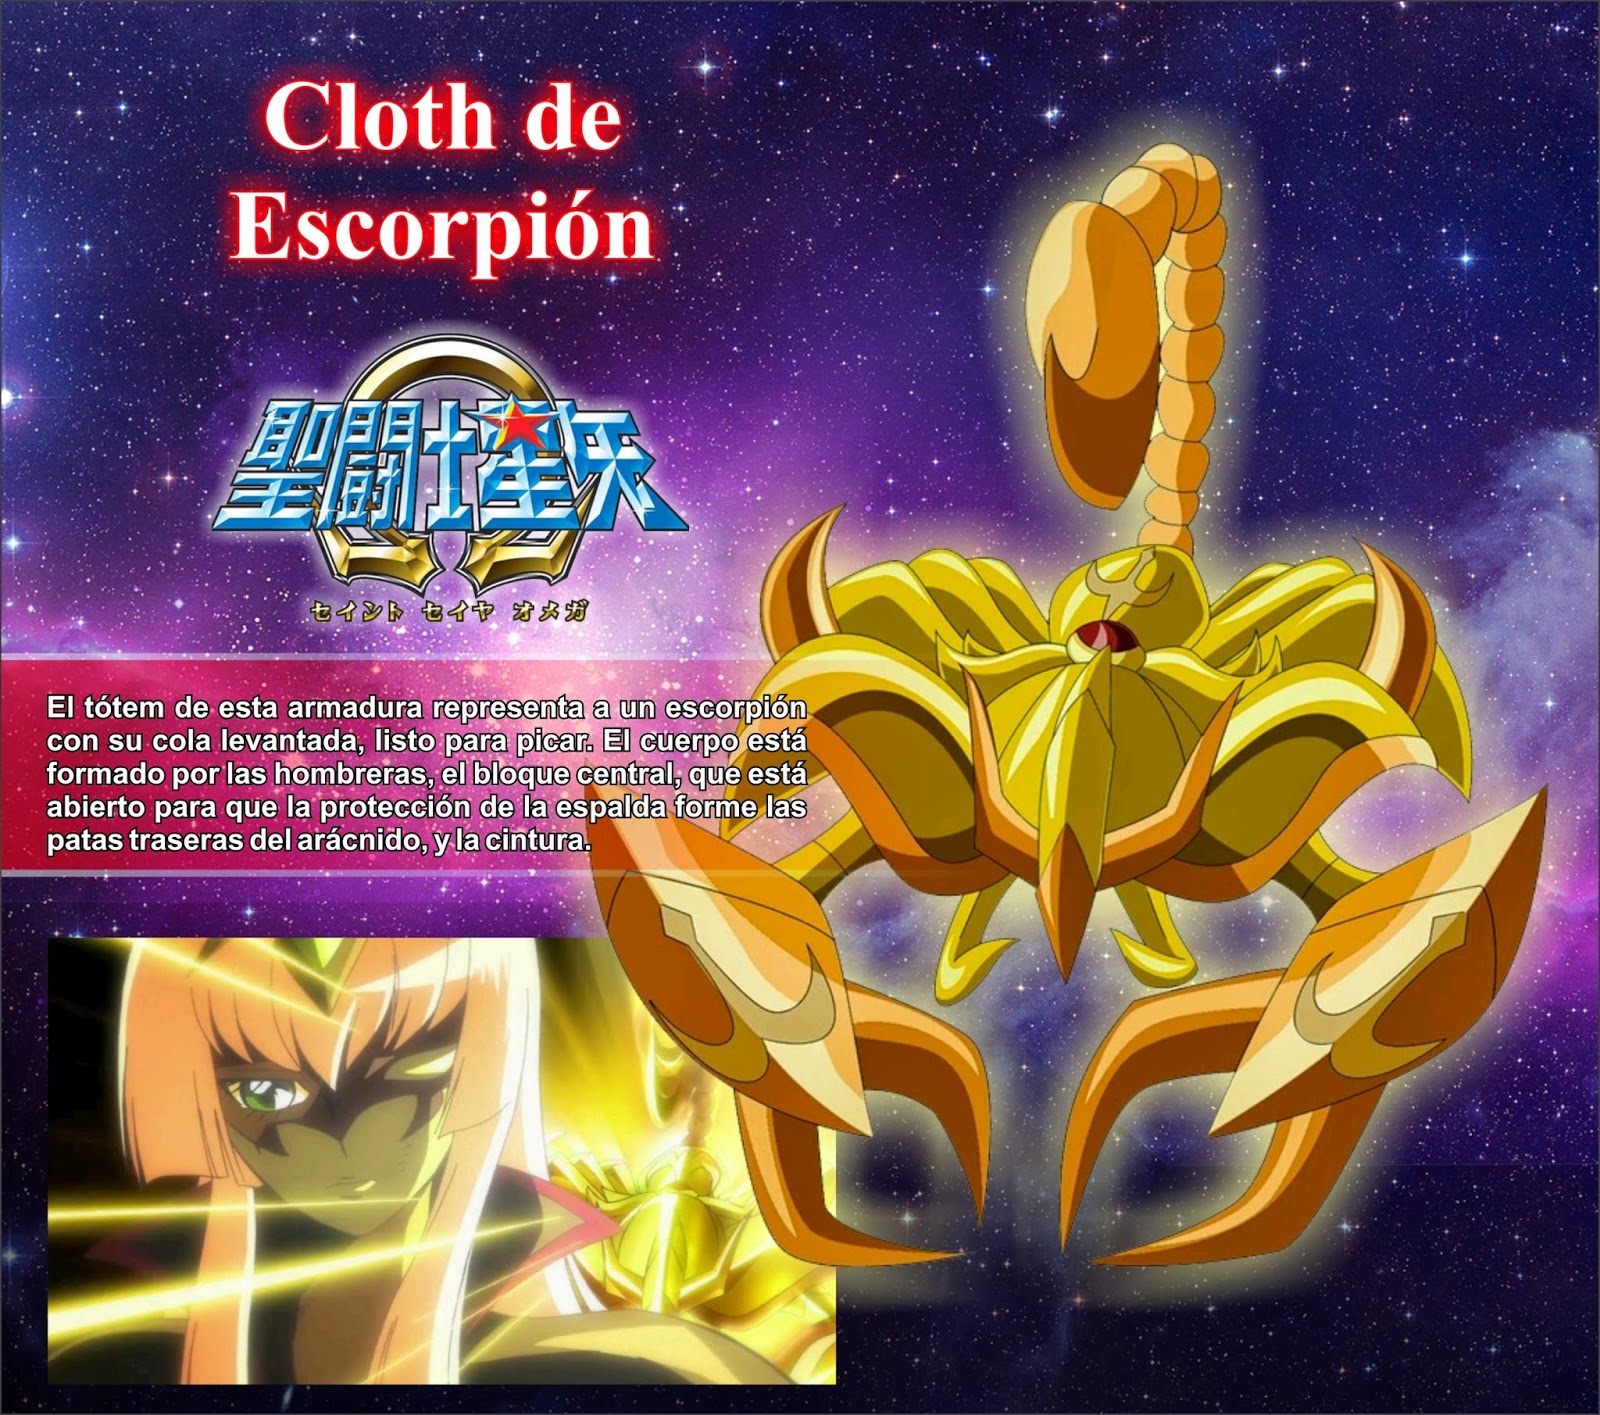 cloth+de+escorpion.jpg